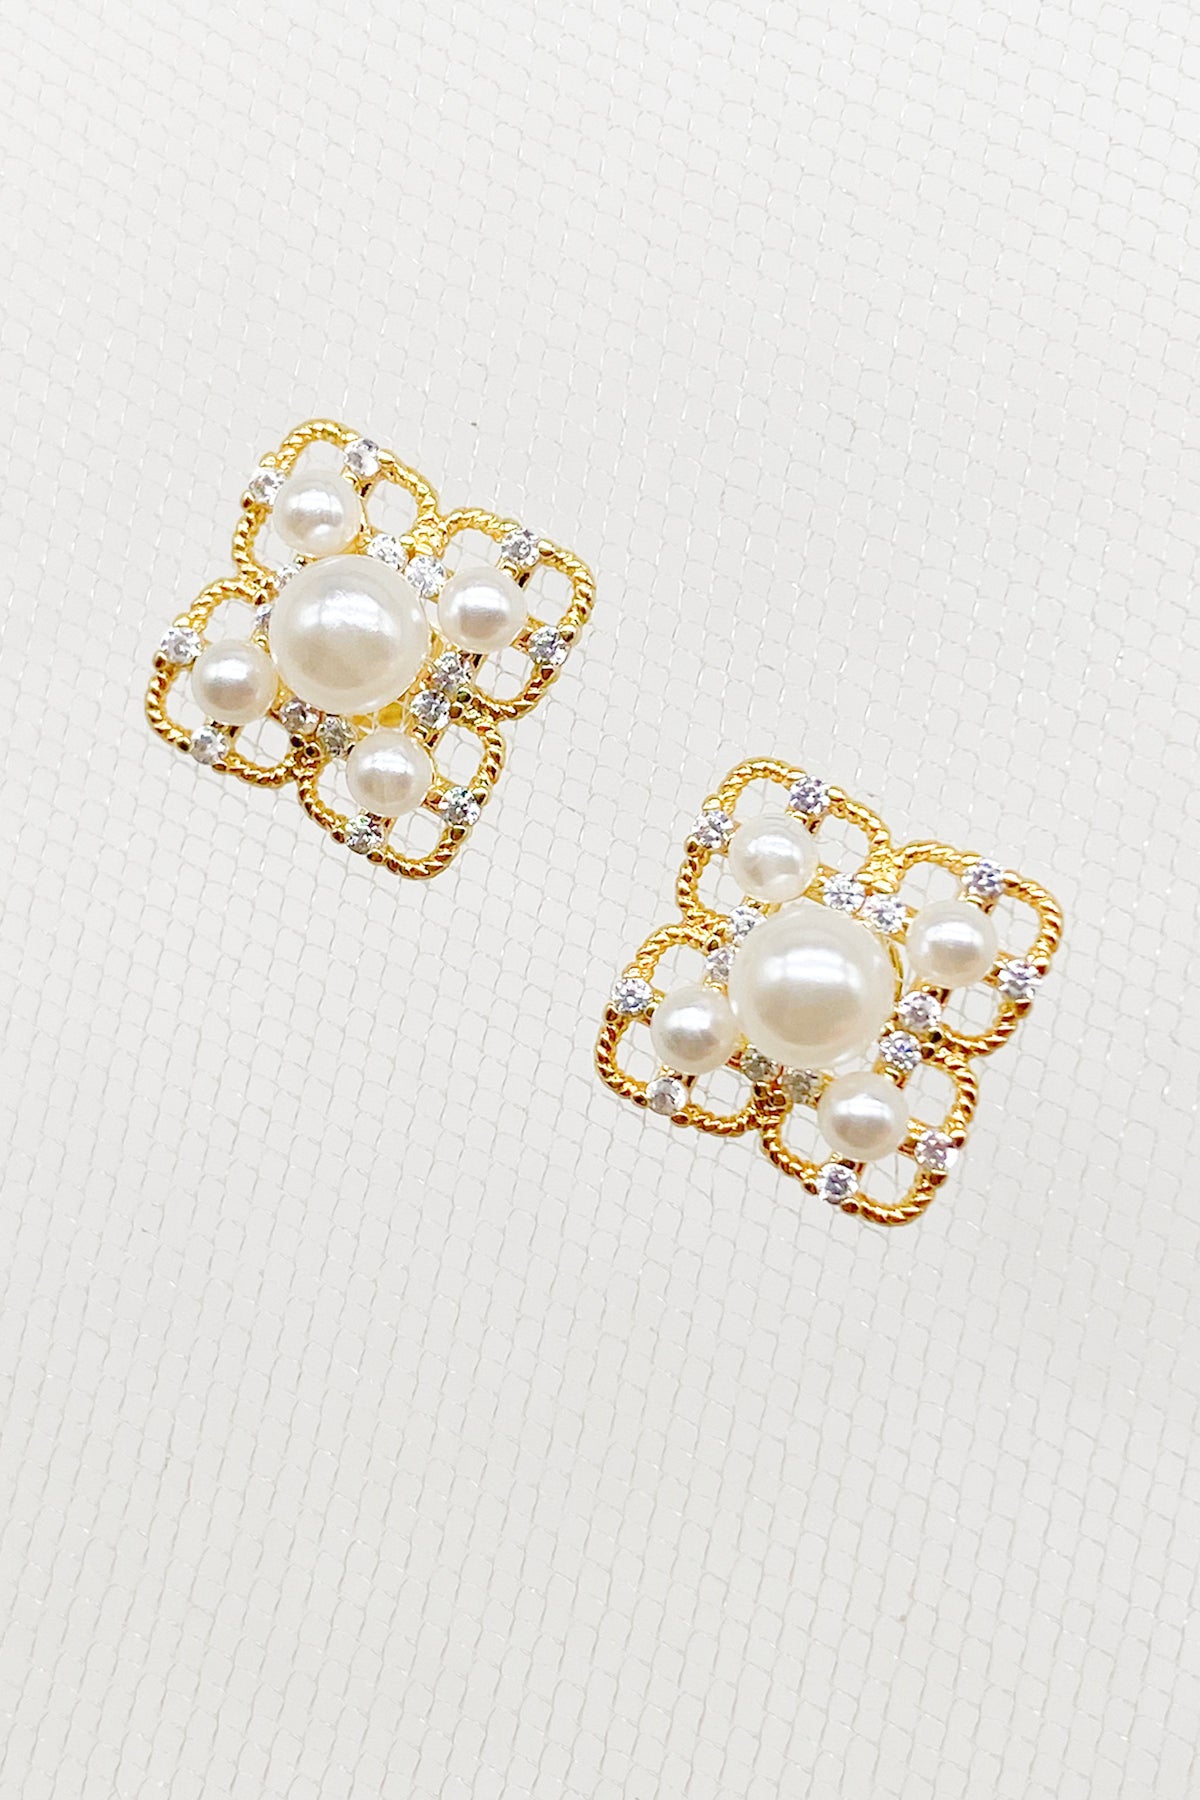 Claudine Gold Pearl Earrings 9